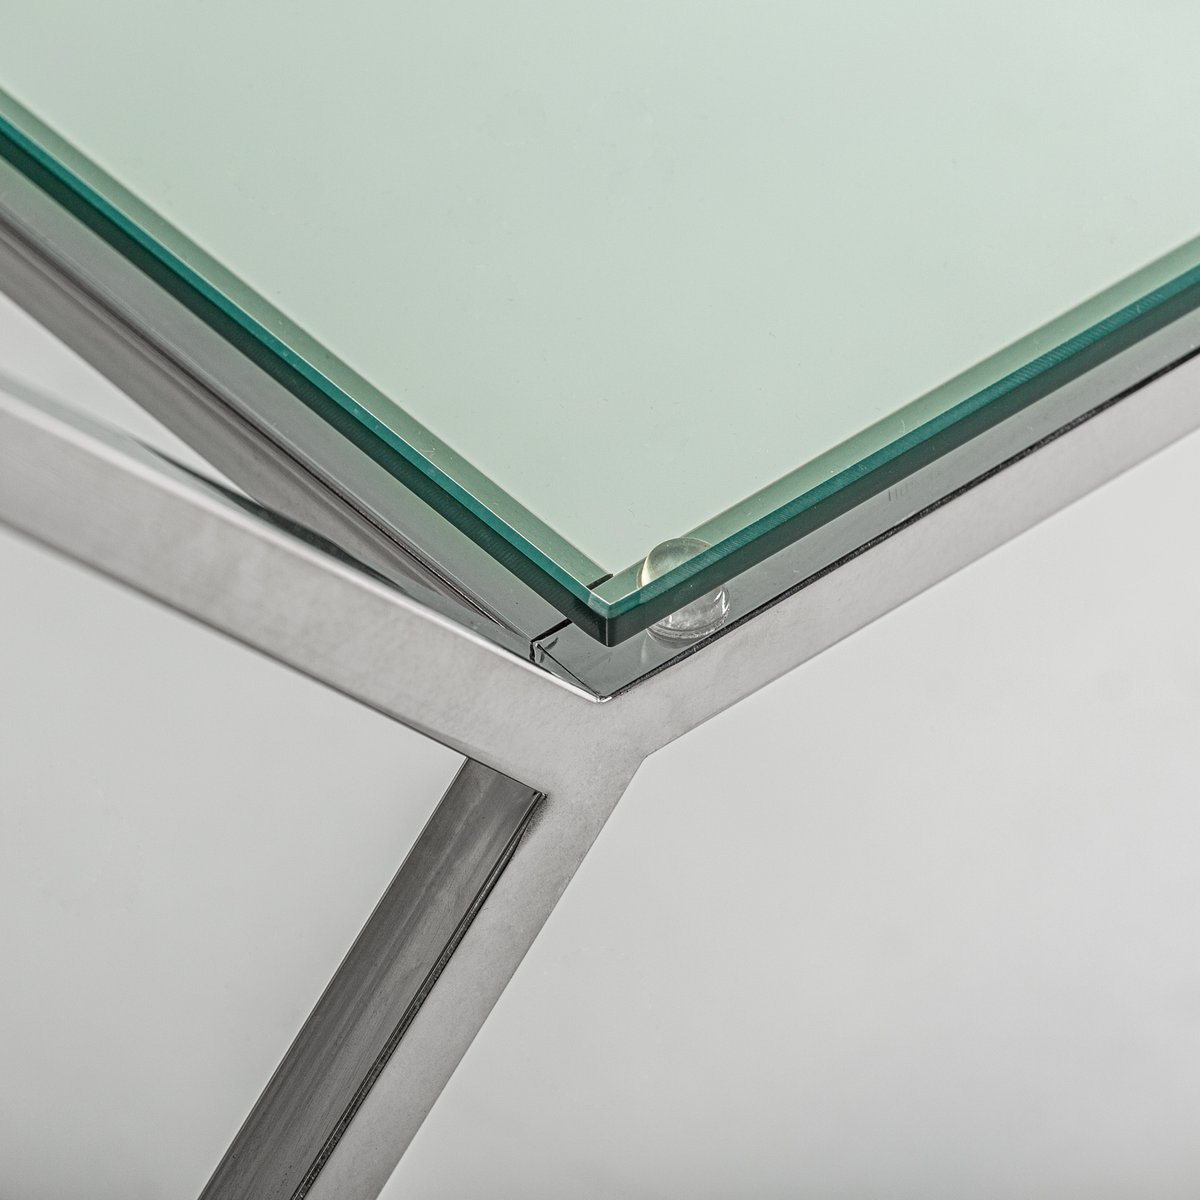 Afwerking transparant blad onderzijde salontafel met blad van gehard glas met marmereffect